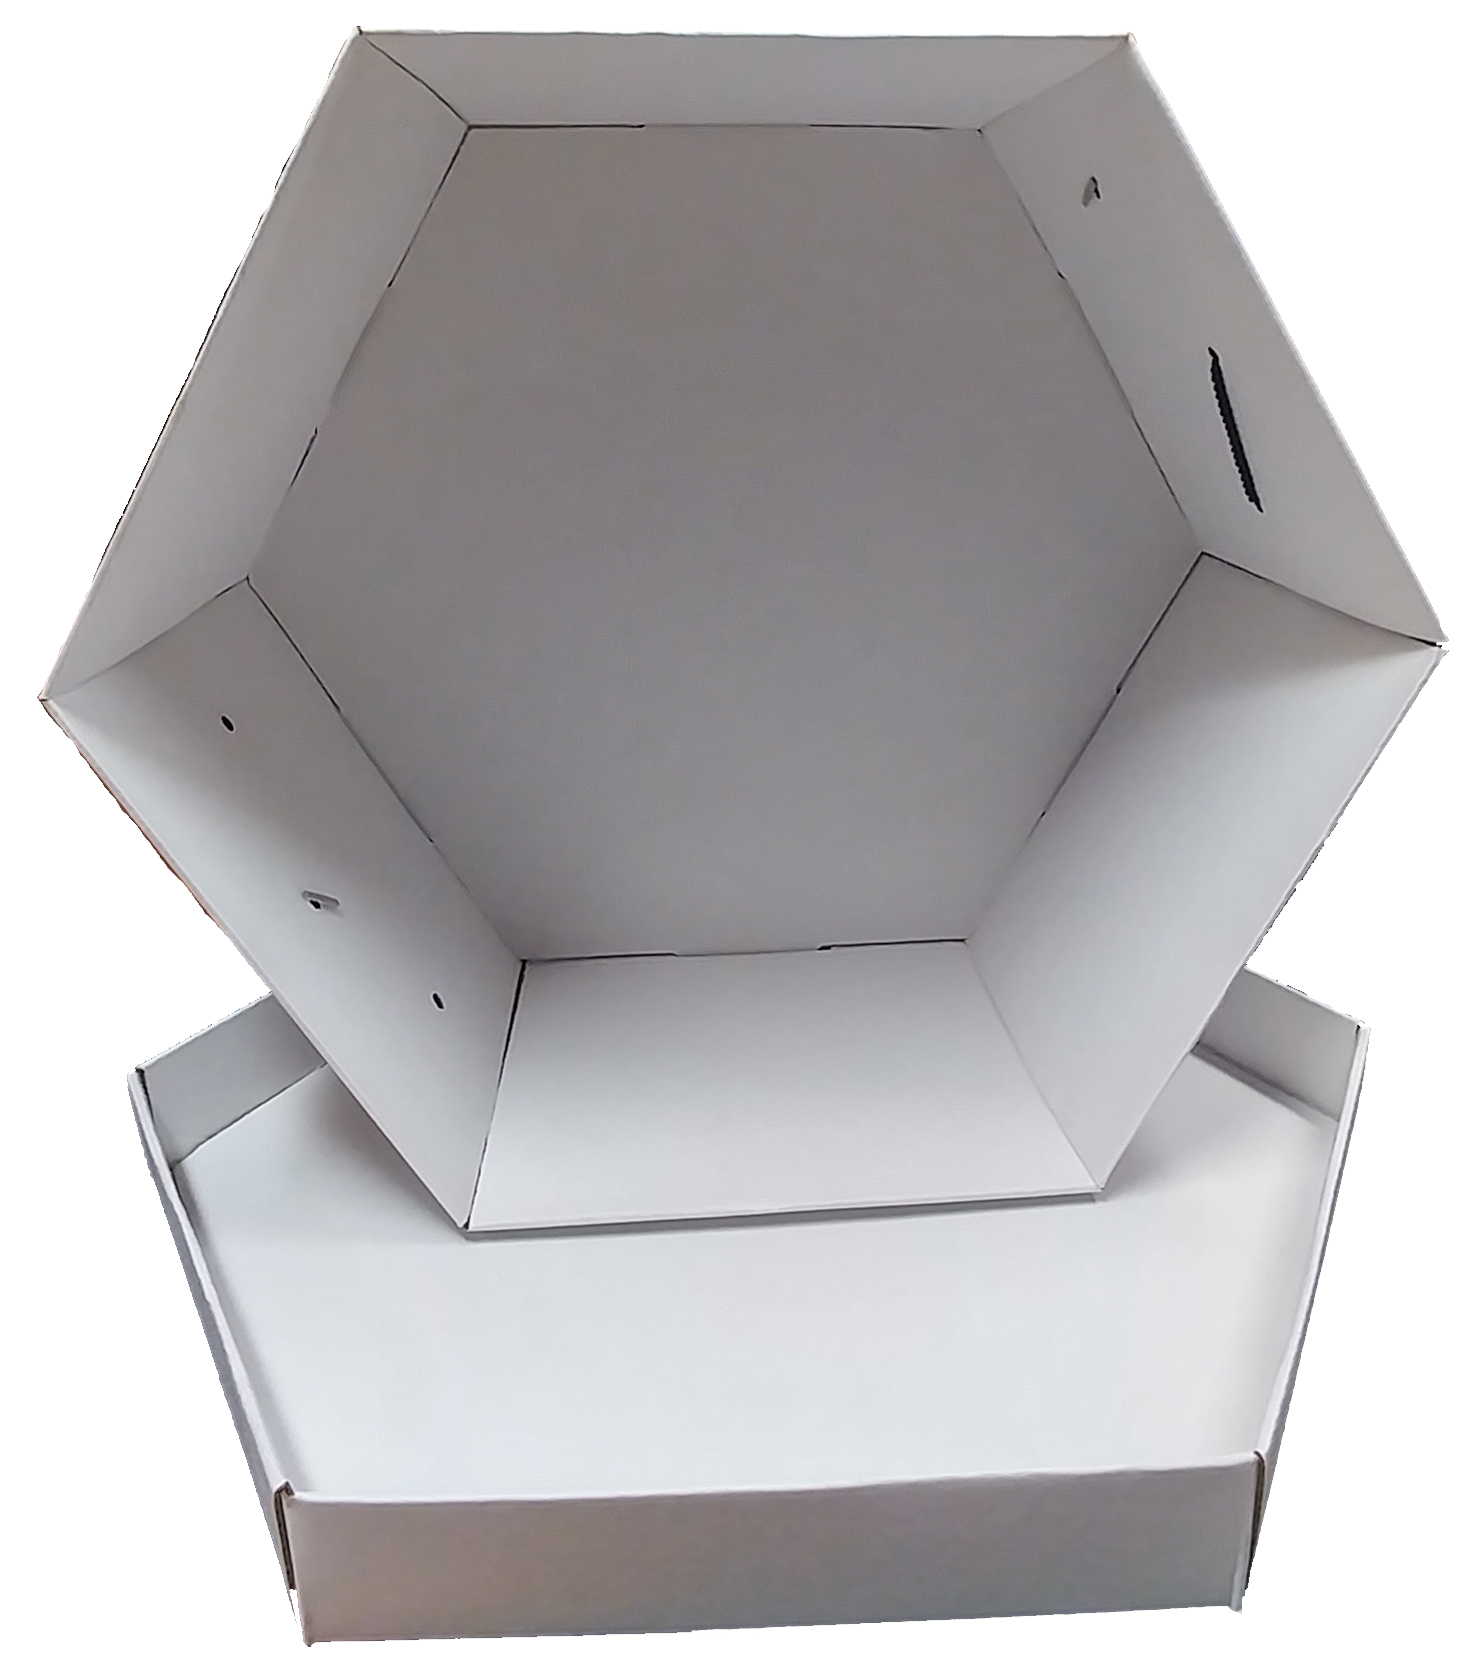 Medium Hat Box (17 x 17 x 9) - Judith M Millinery Supply House